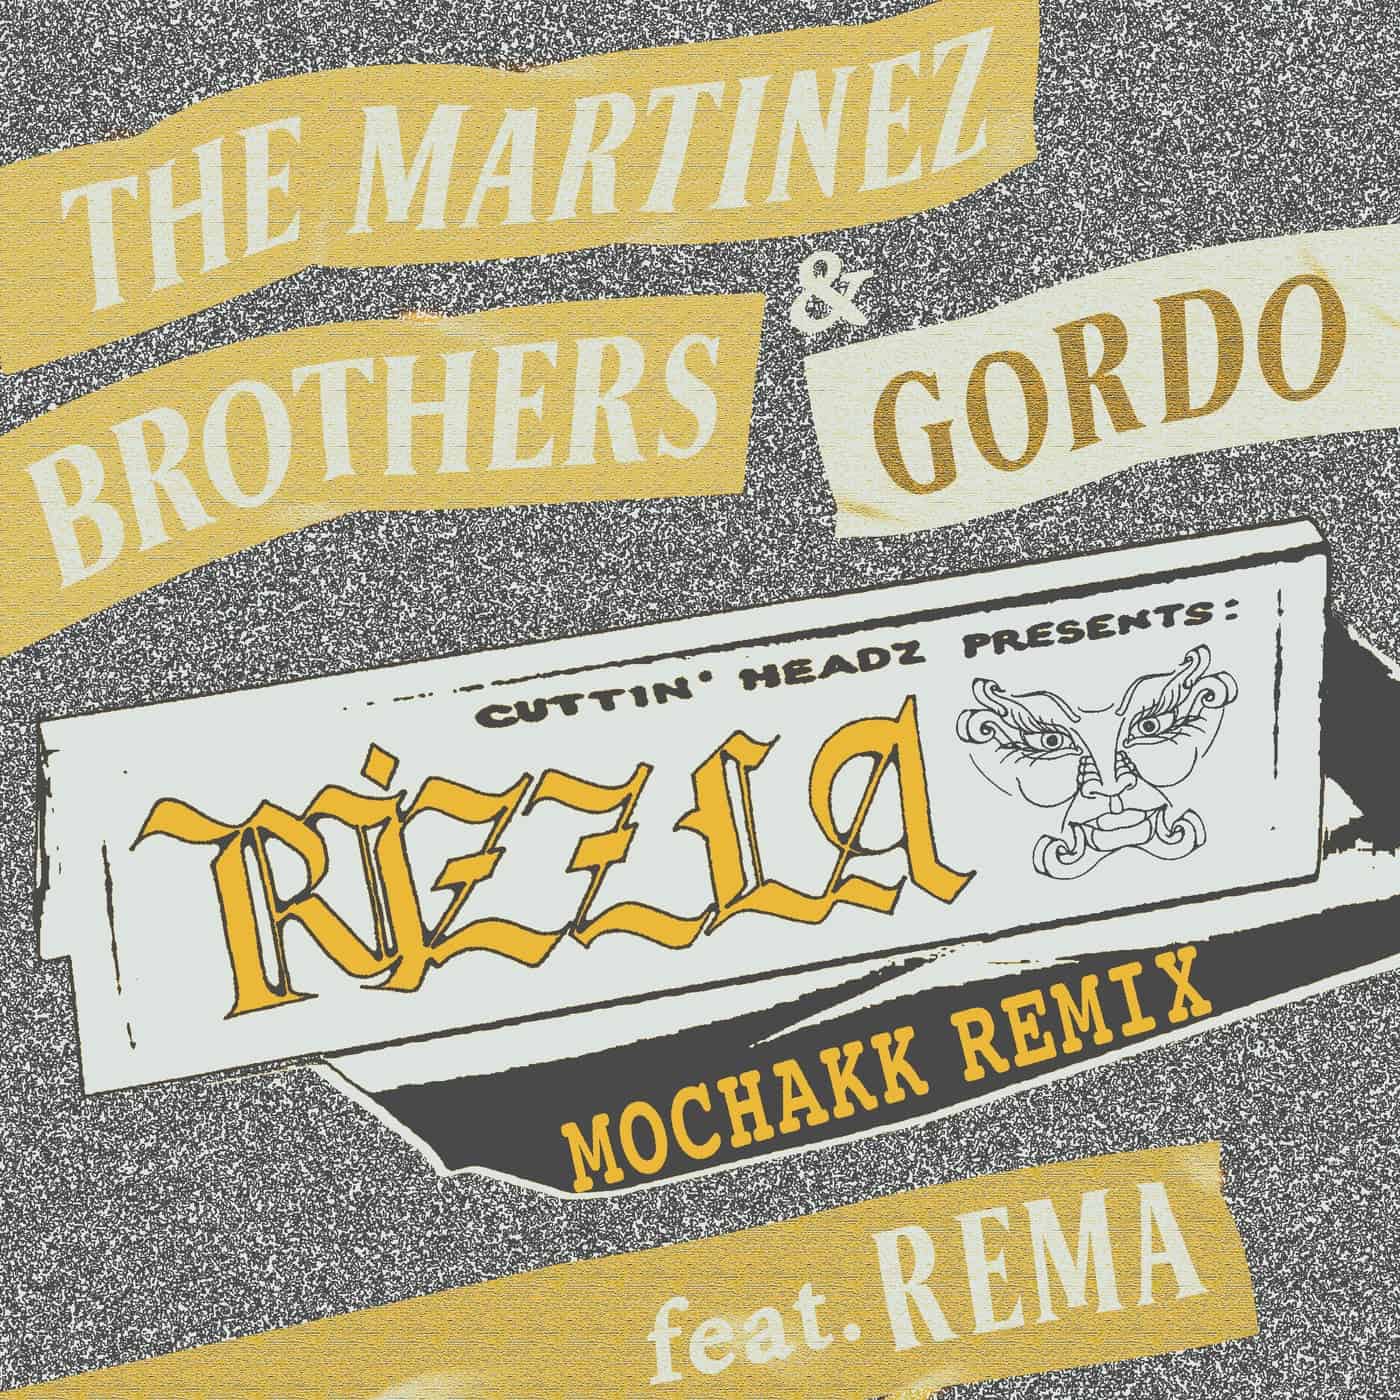 image cover: The Martinez Brothers, Gordo, Rema - Rizzla feat Rema - Mochakk Remix / CHX003